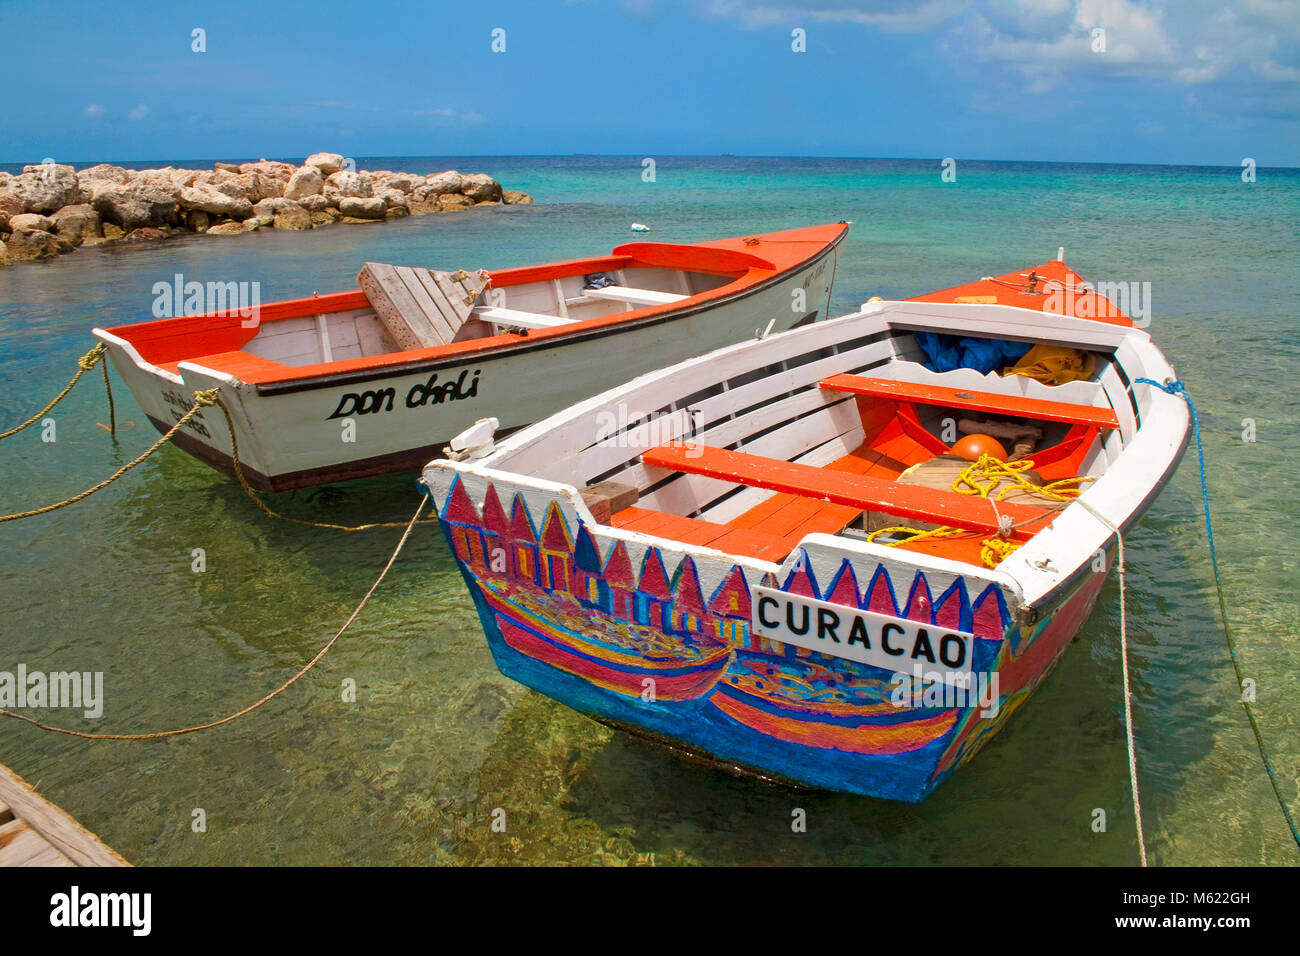 Verniciato colorate barche da pesca a Pierbaai, Curacao, Antille olandesi, Caraibi, Mar dei Caraibi Foto Stock